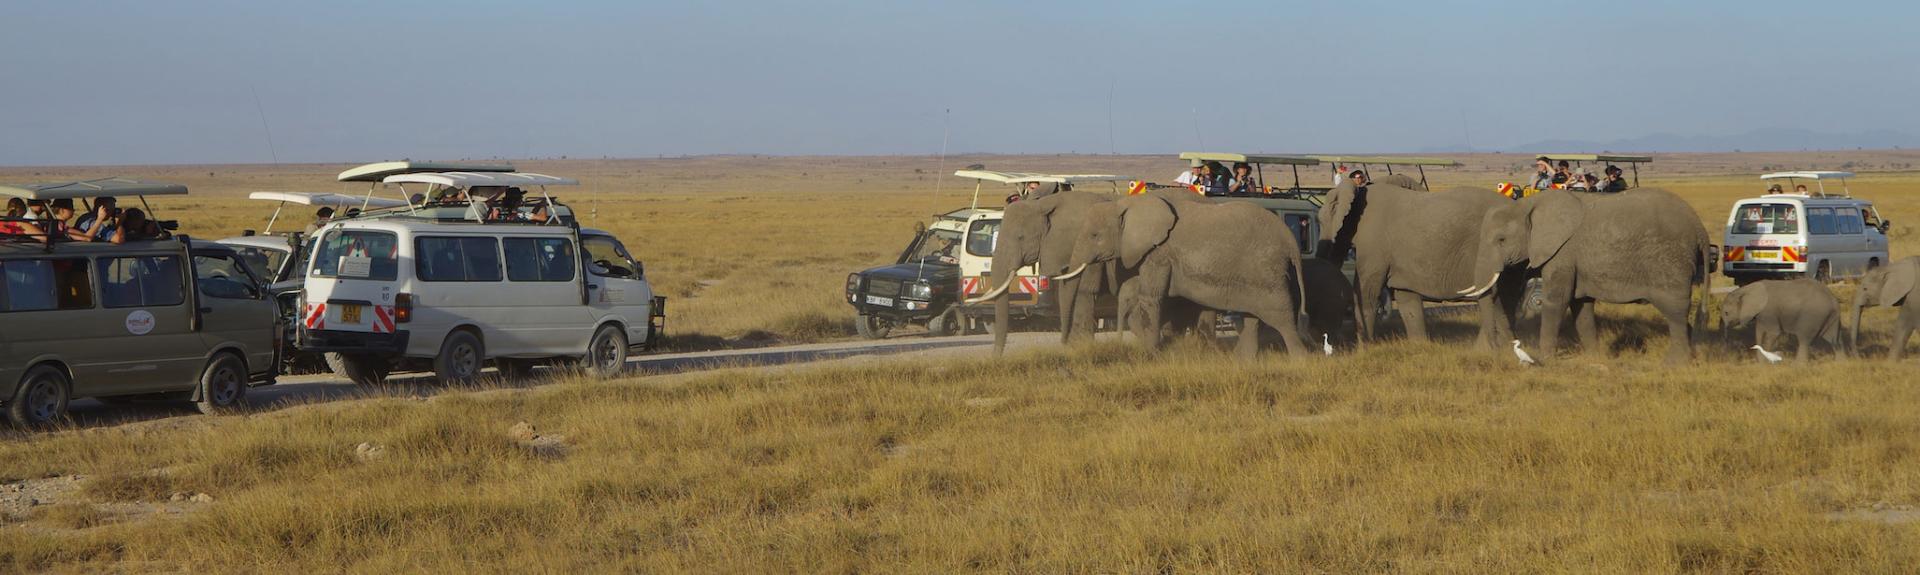 Figure 1: International tourists taking pictures of elephants in Amboseli National Park. (Toshio Meguro)